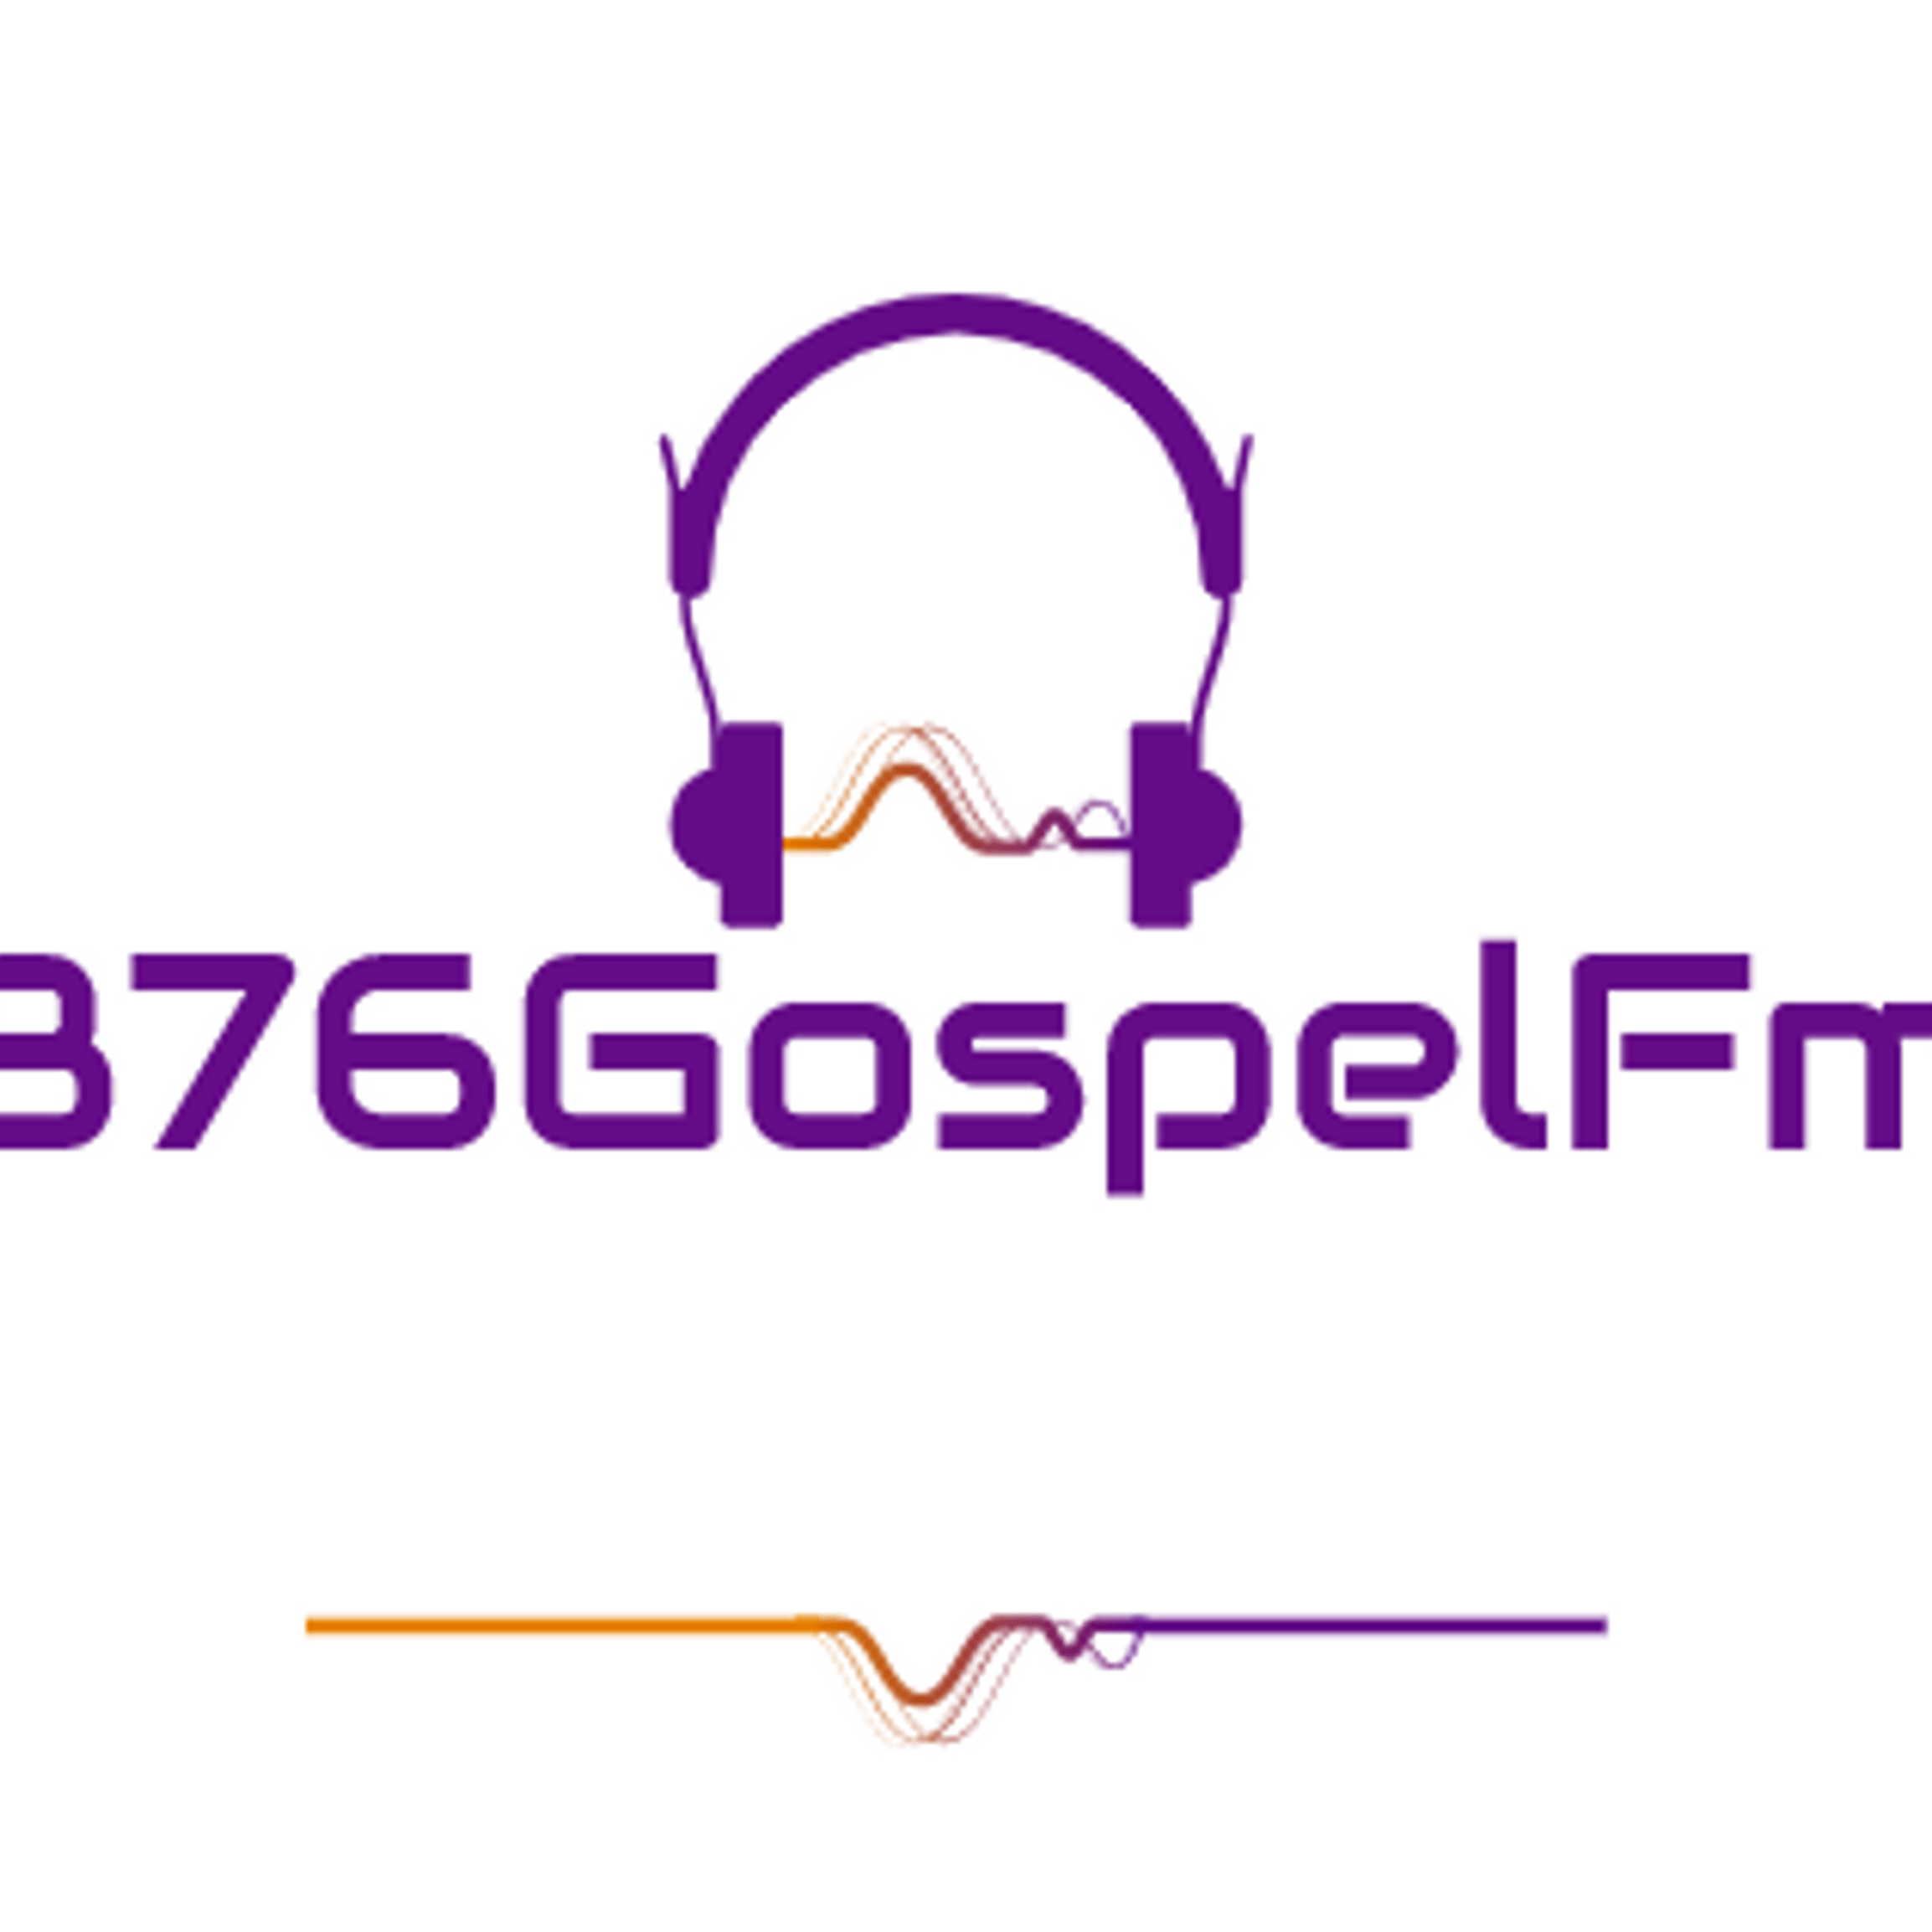 876GospelFM